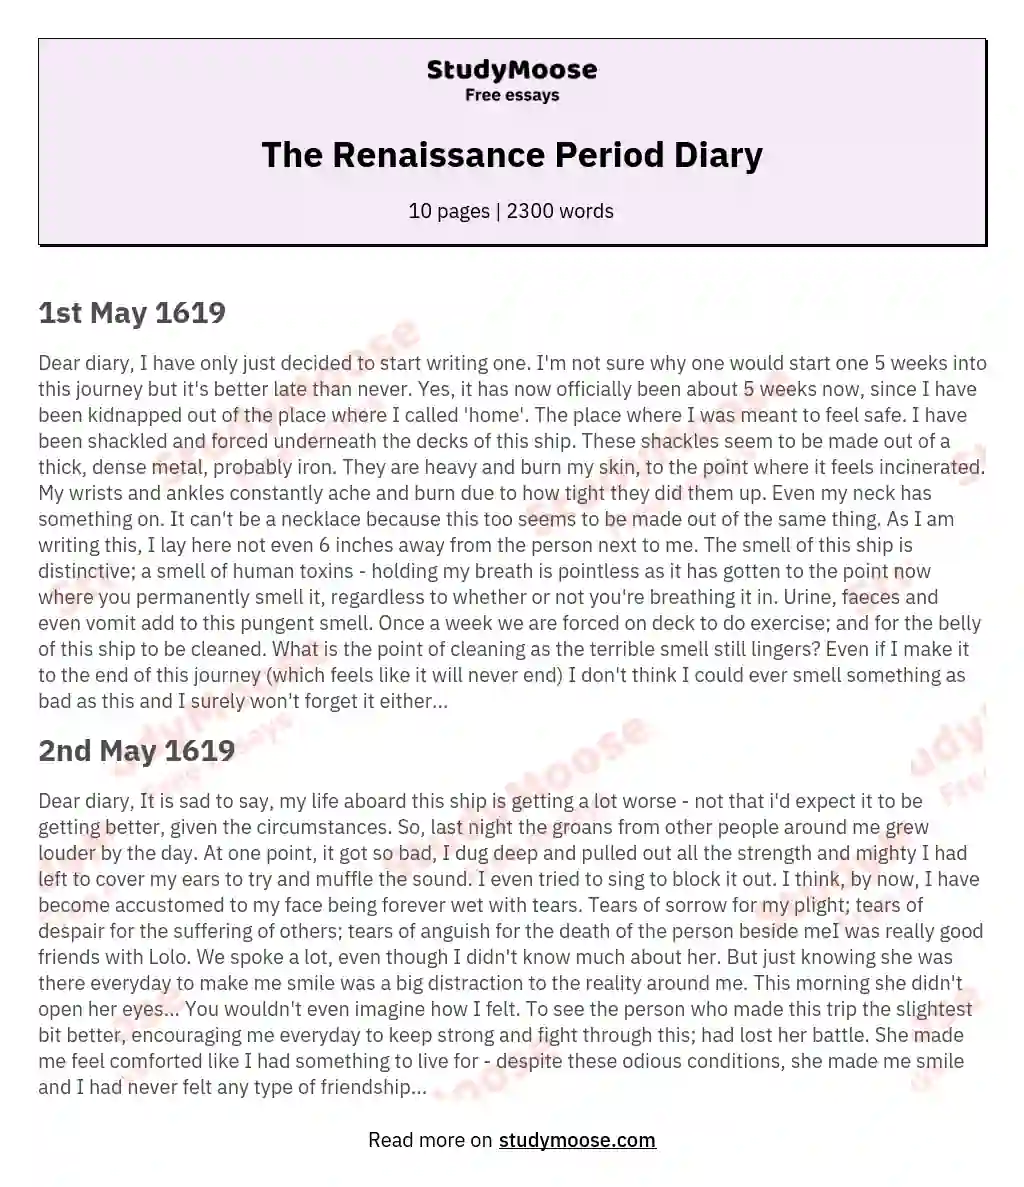 The Renaissance Period Diary essay